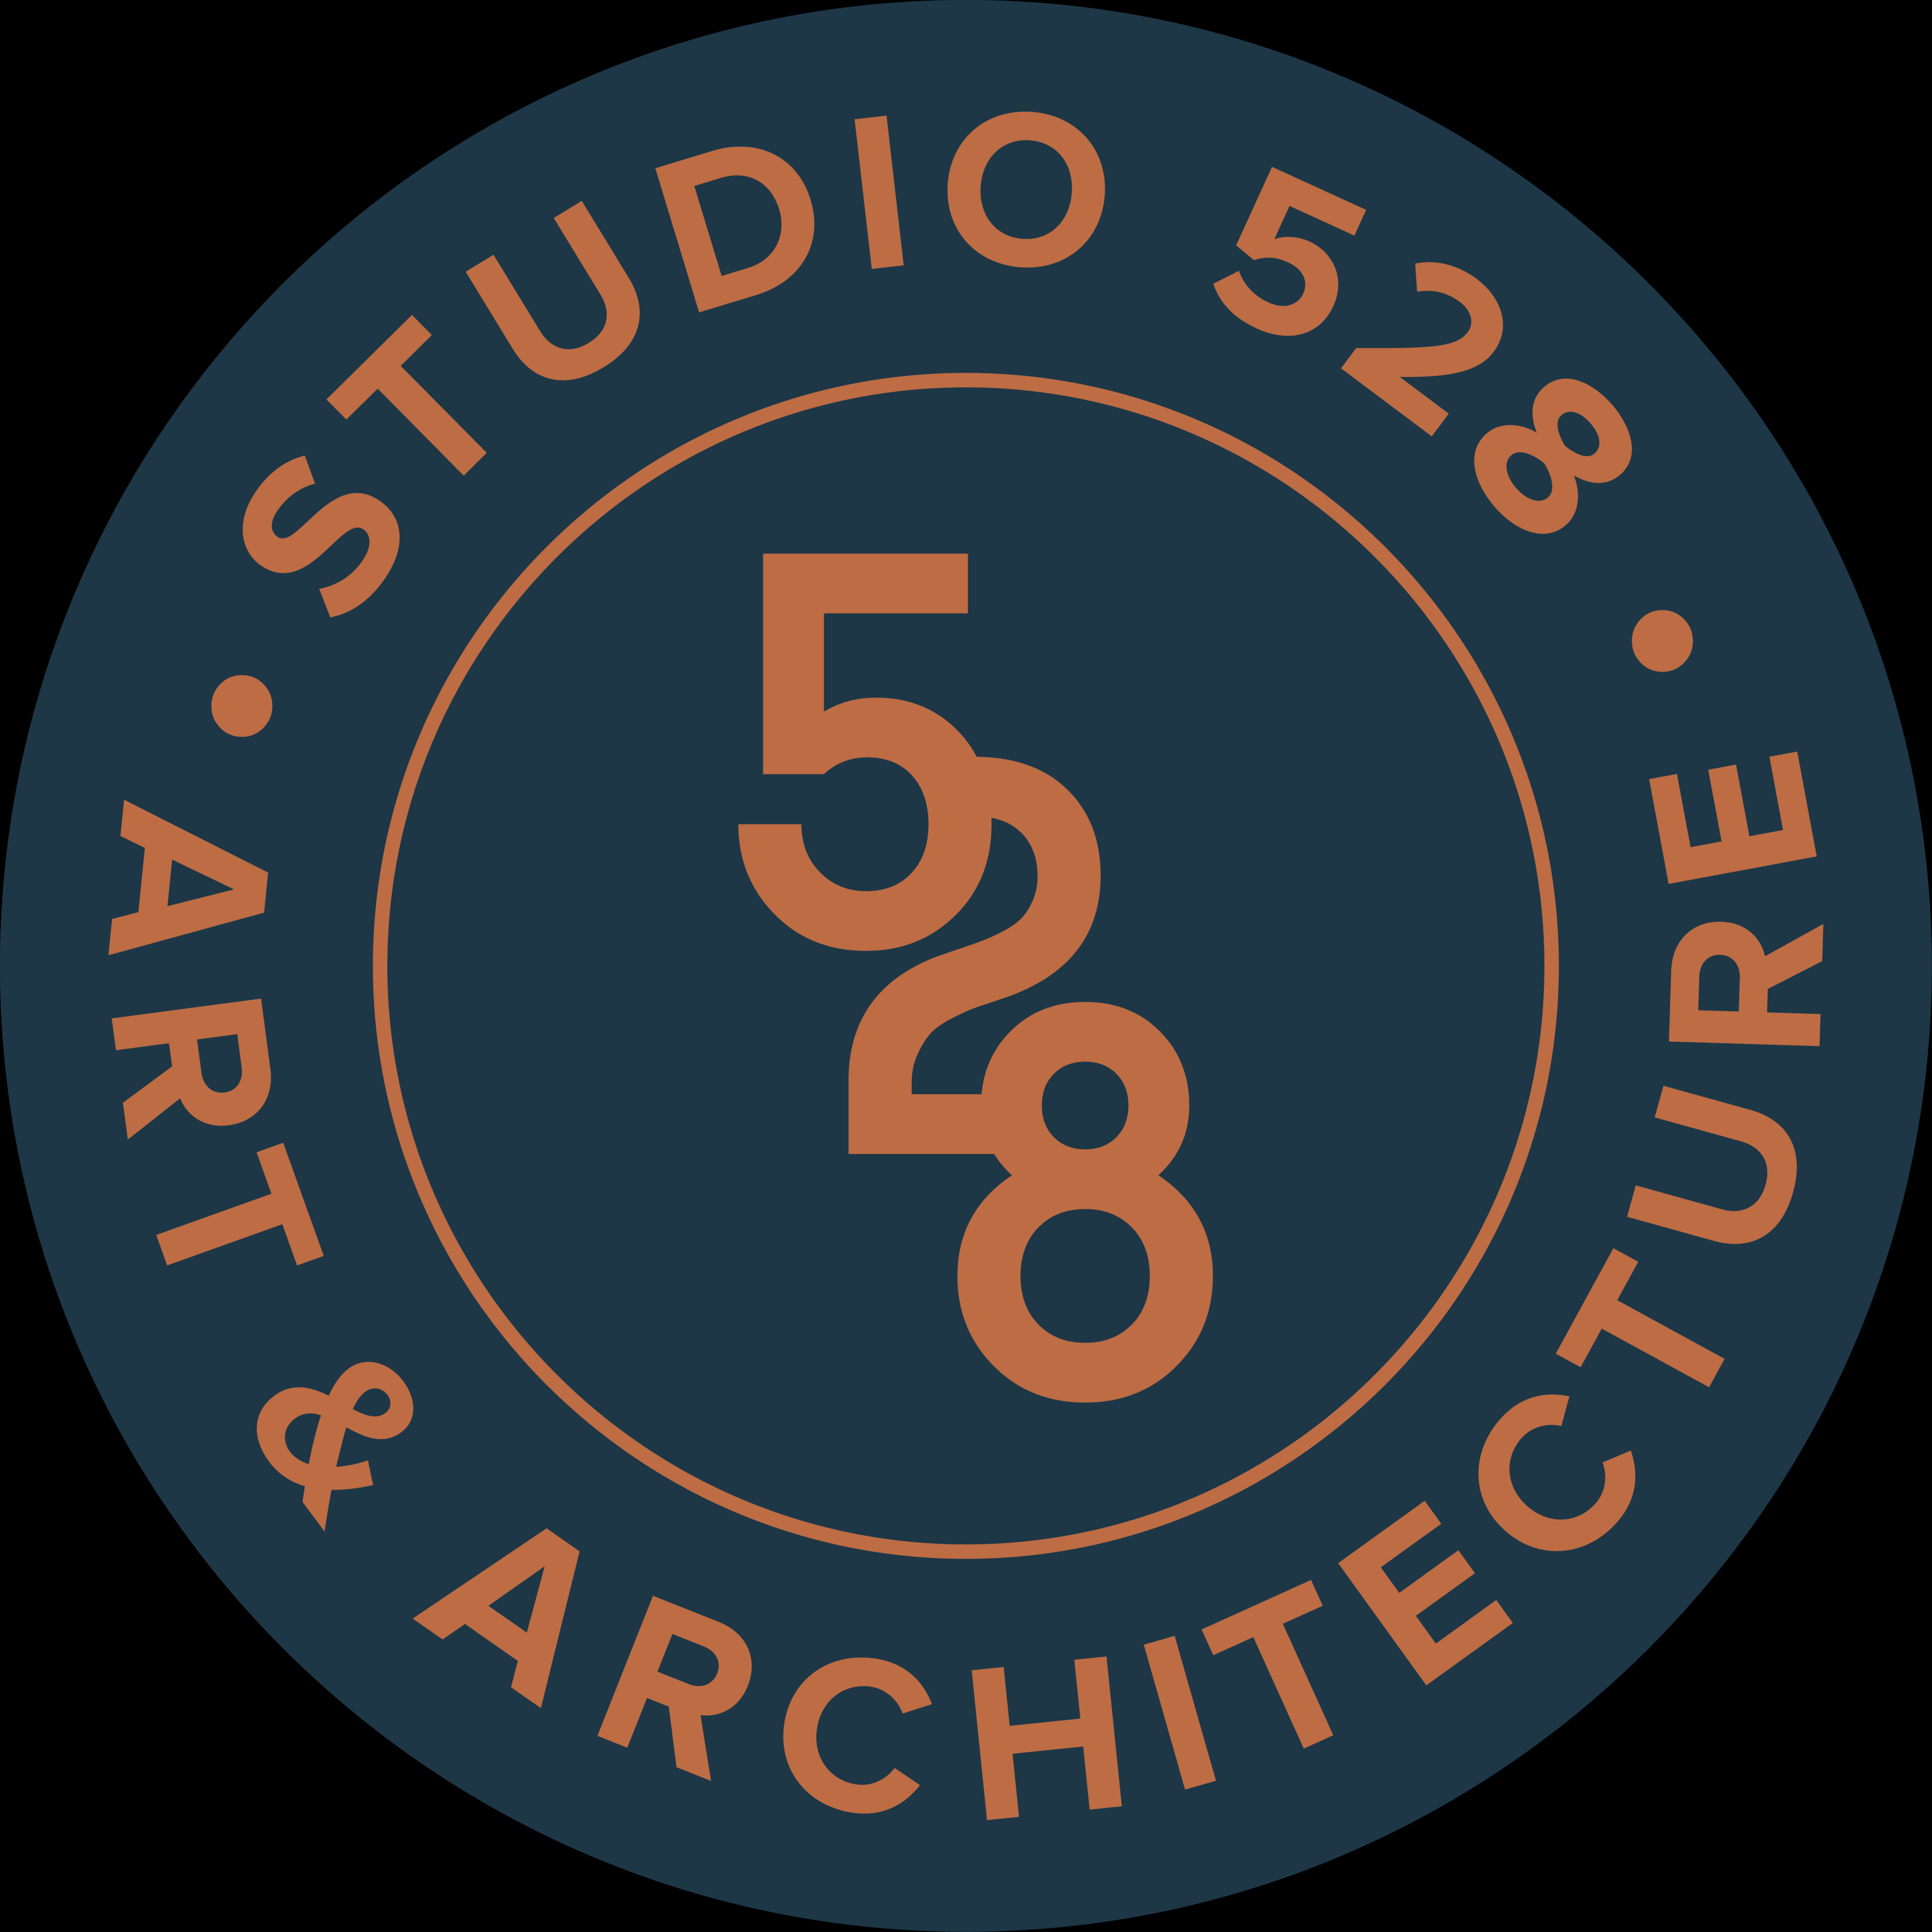 528 design studio Bulan 4 HOME  Studio  Art & Architecture  Santa Cruz